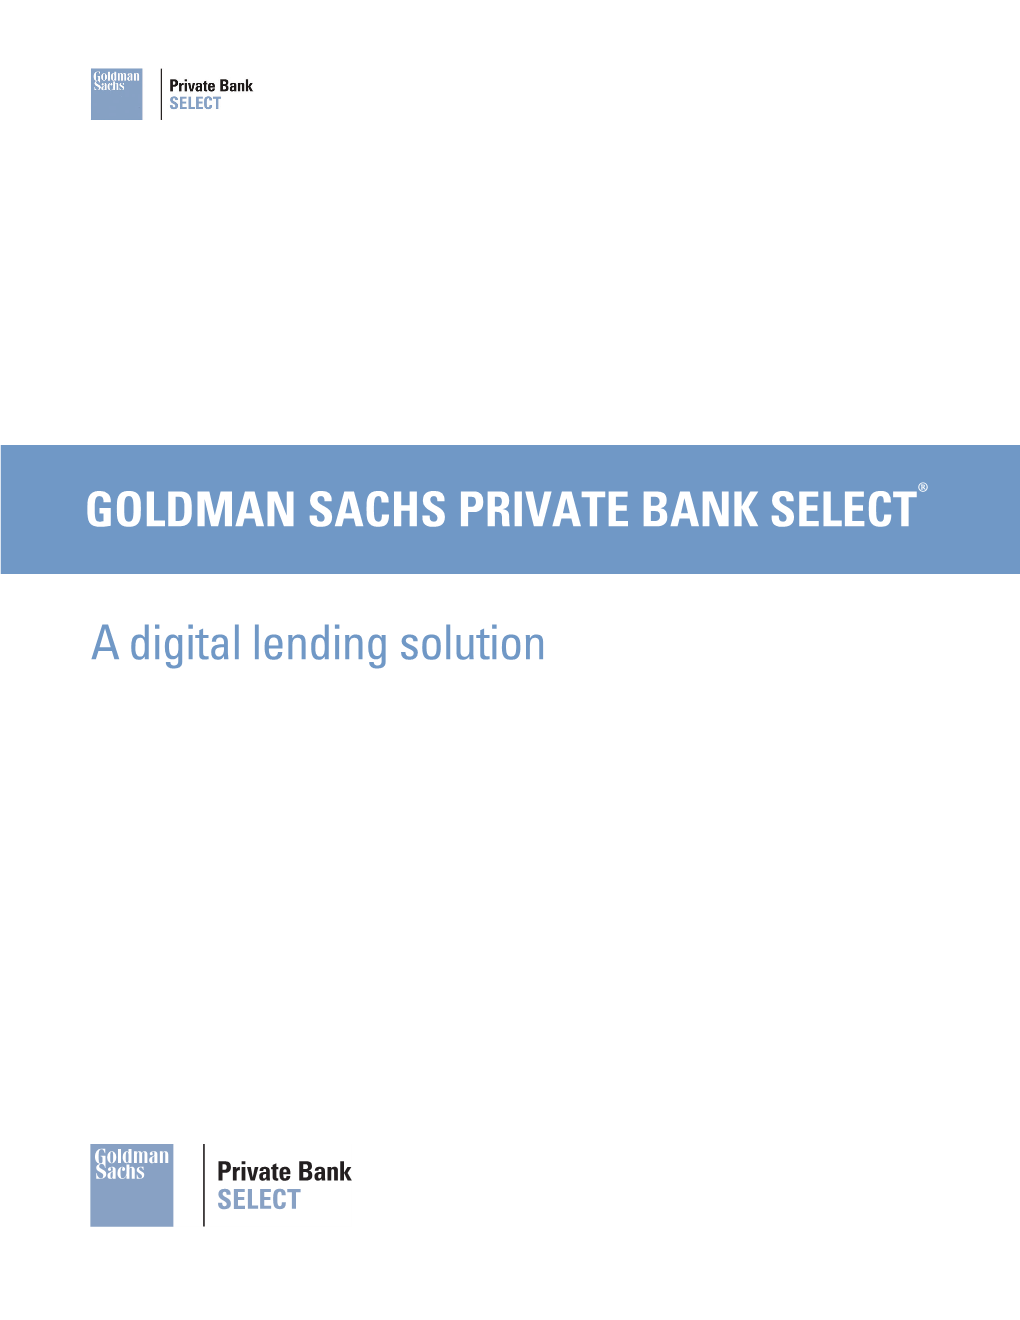 GOLDMAN SACHS PRIVATE BANK SELECT a Digital Lending Solution